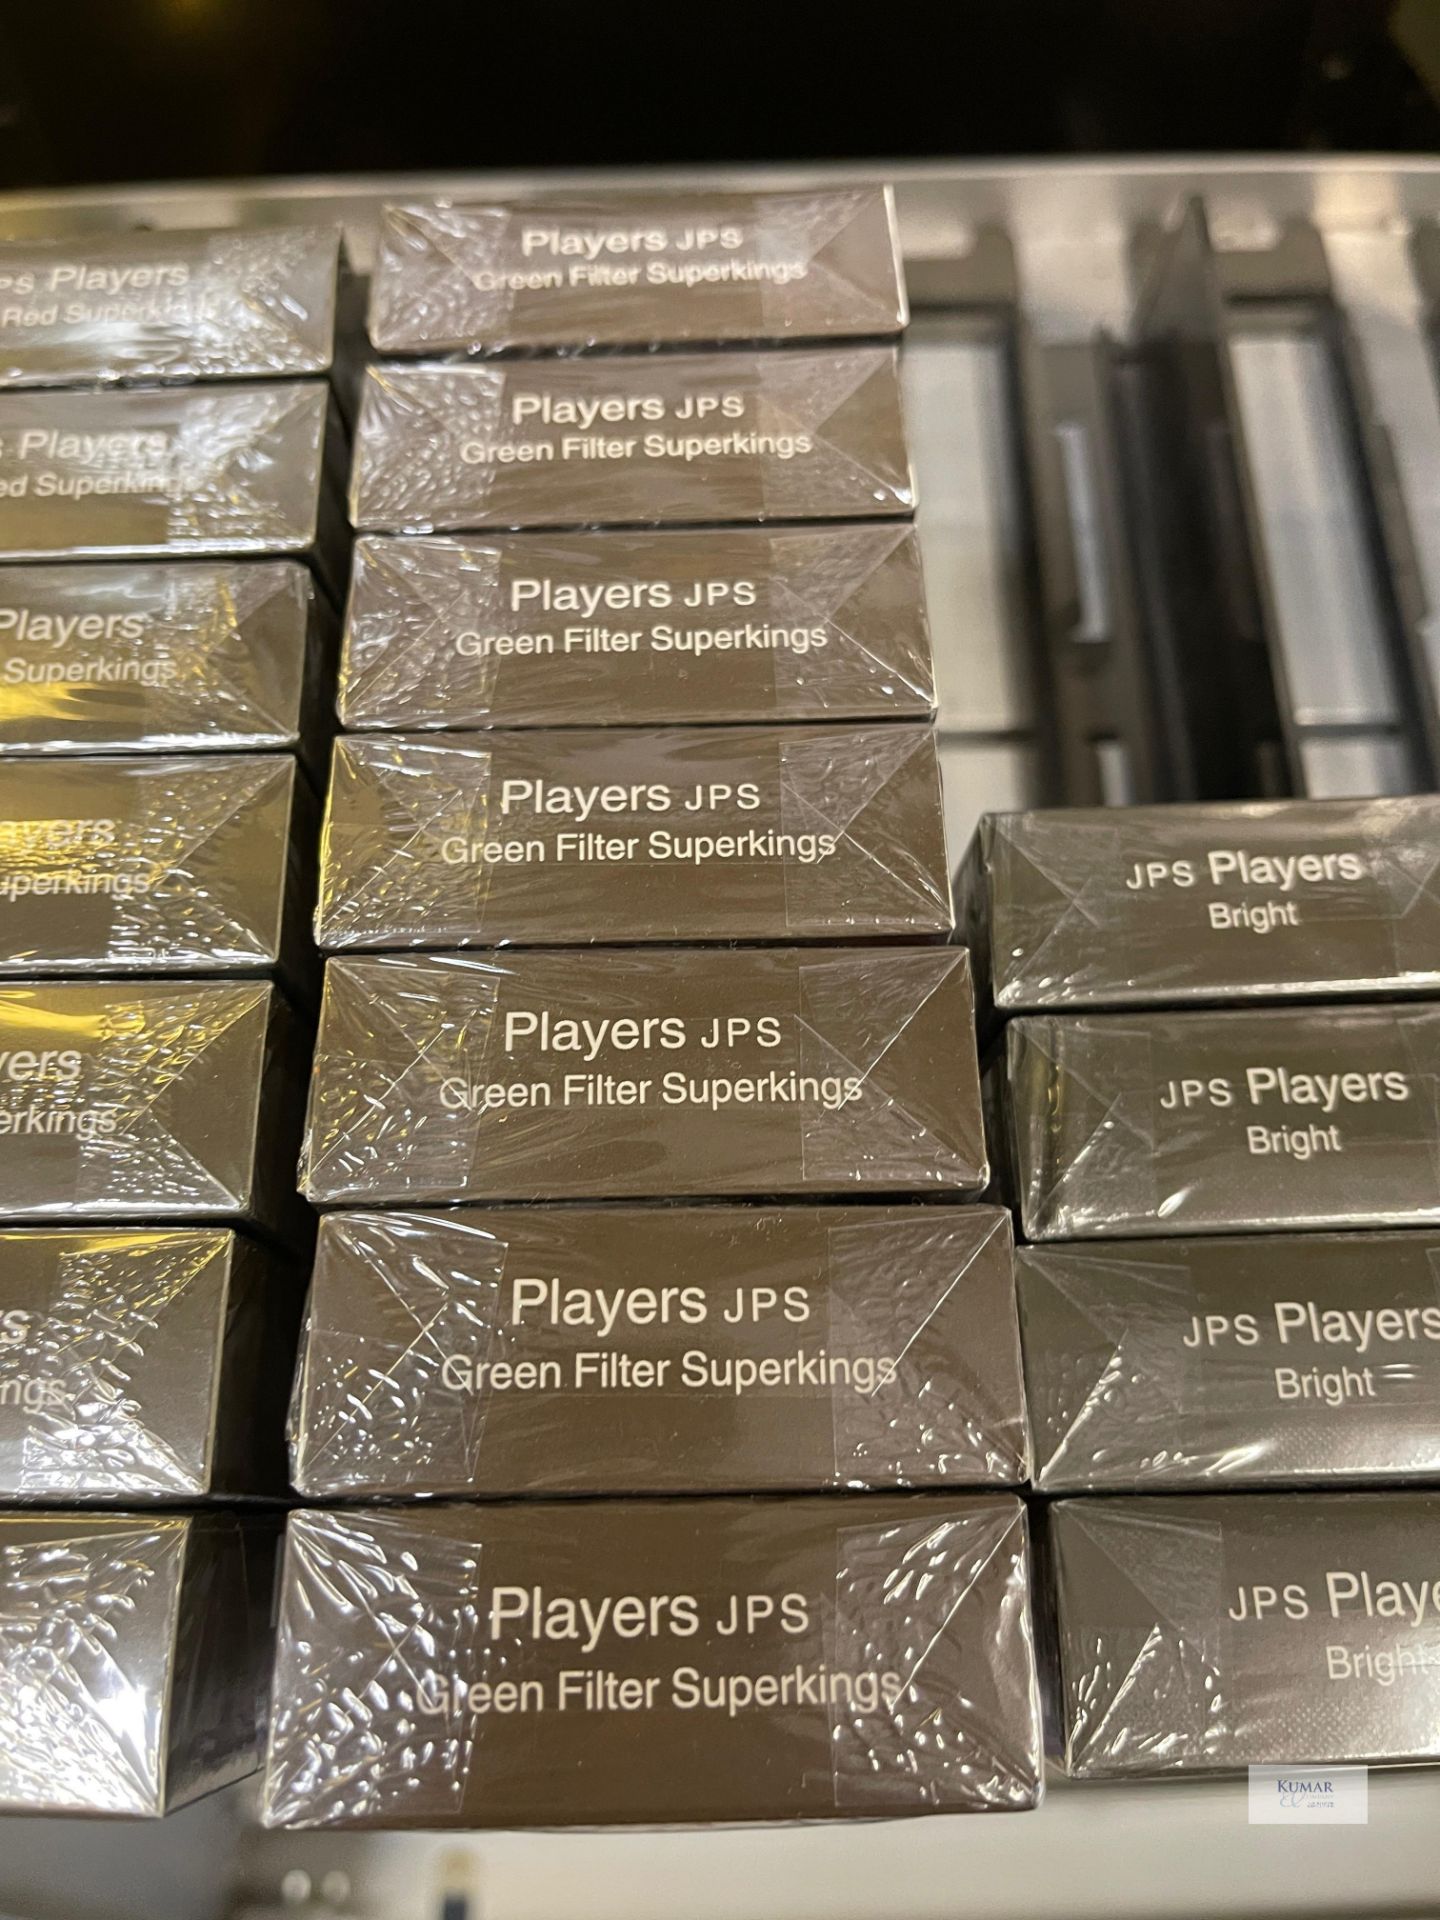 2 Packs: JPS Bright Super kings 20 Cigarettes, 7 Packs: JPS Players Real Read Super kings 20 - Image 8 of 14